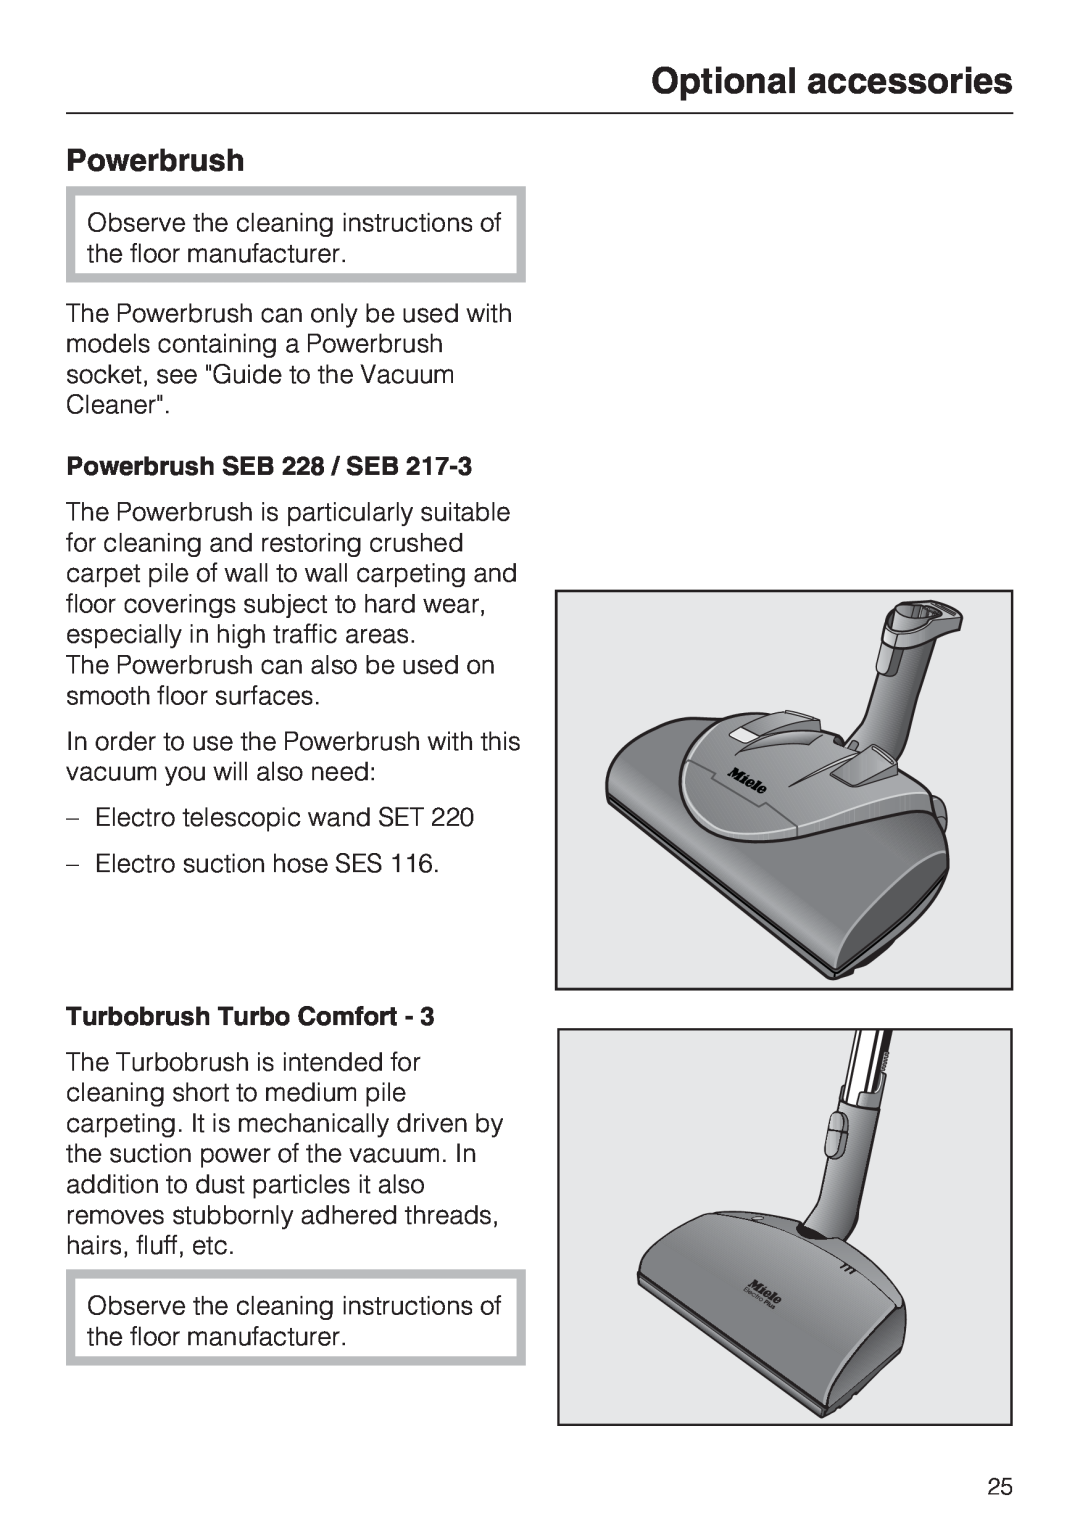 Miele S 2000 operating instructions Optional accessories, Powerbrush SEB 228 / SEB, Turbobrush Turbo Comfort 